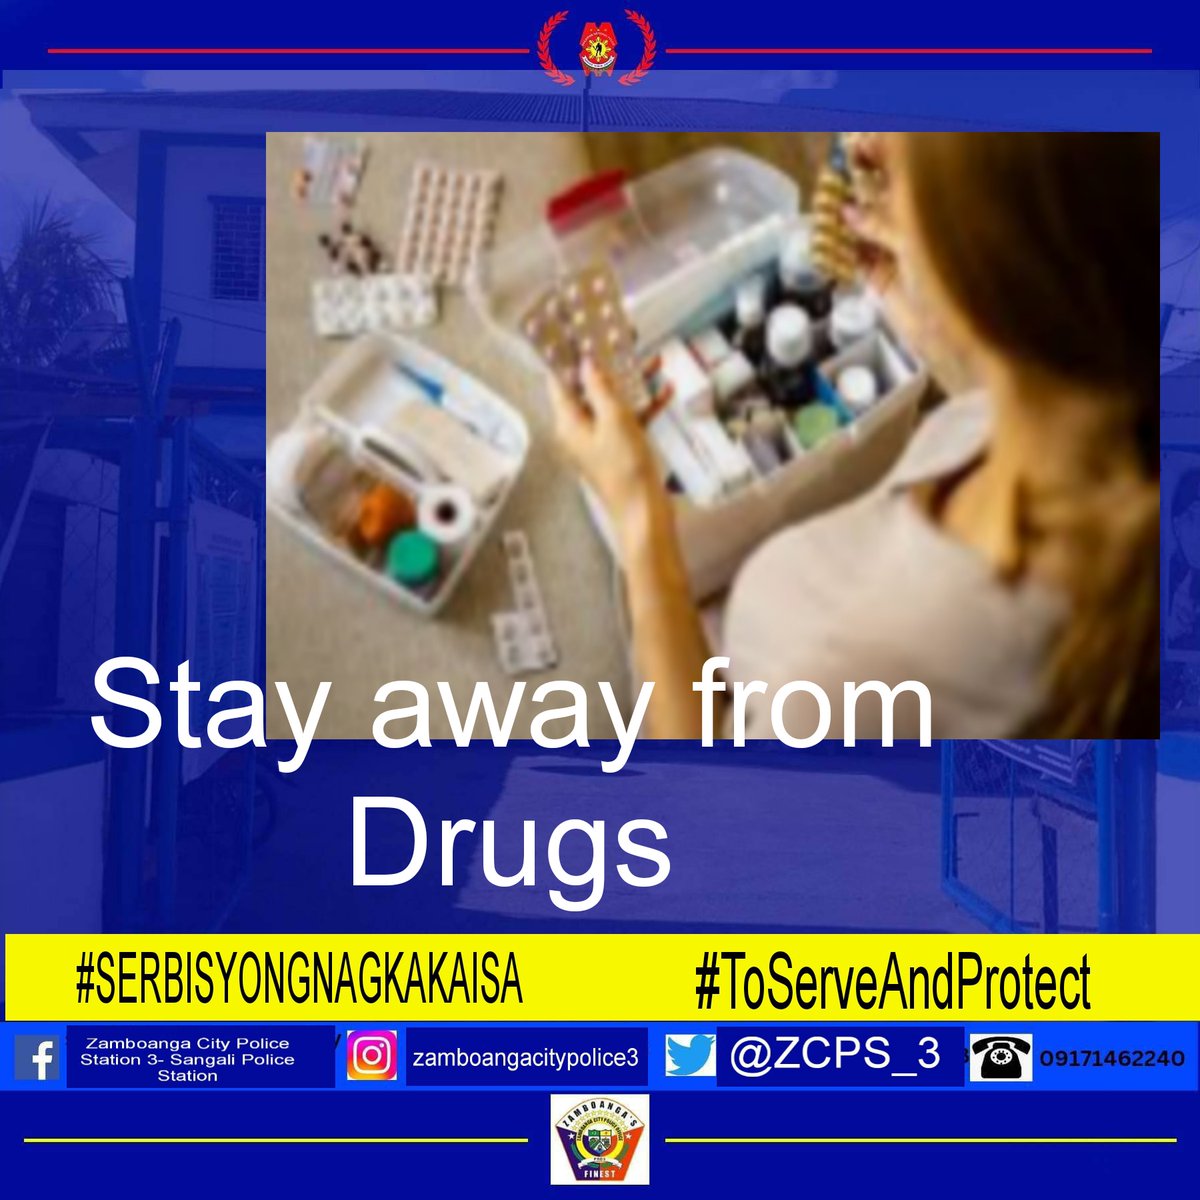 SAY NO TO DRUGS

#SerbisyongNagkakaisa 
#PNPKakampiNyo